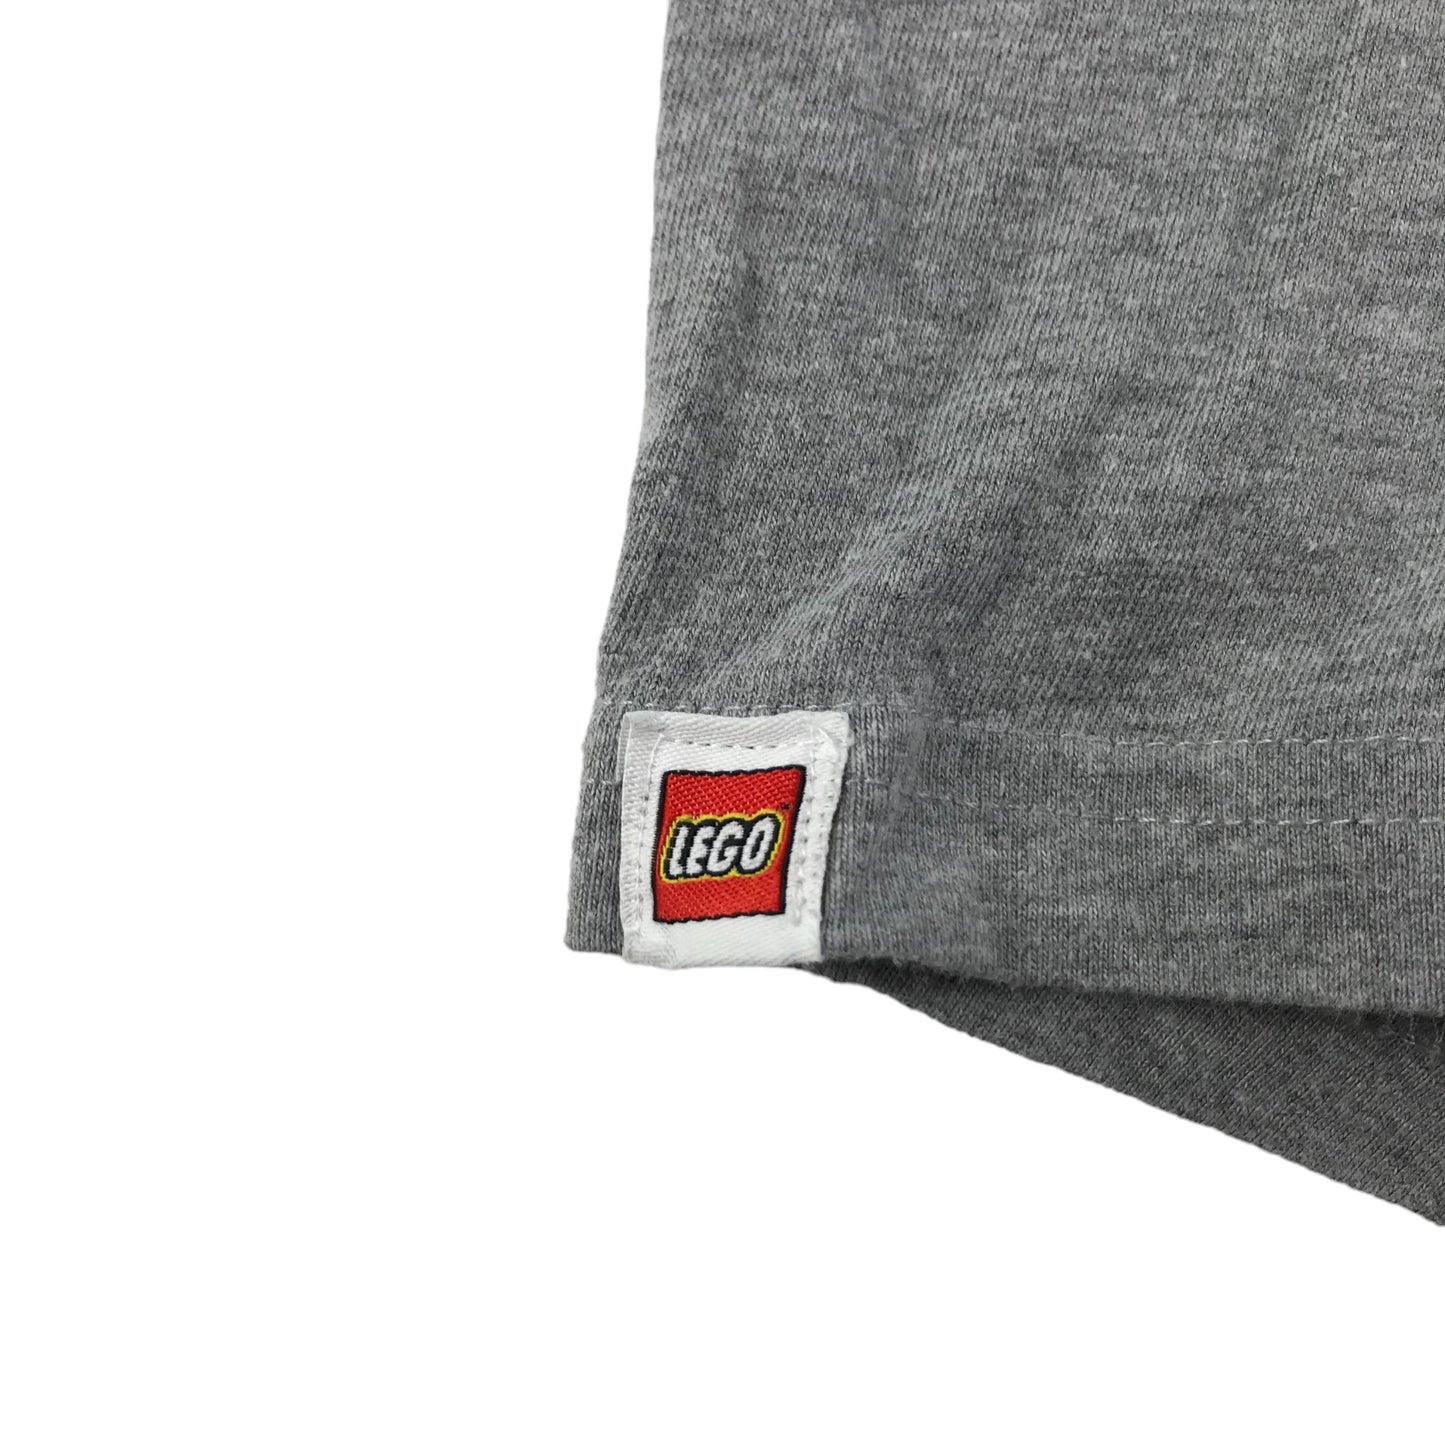 LEGO T-Shirt Age 8 Grey Long Sleeve Lego Ninjago Graphic